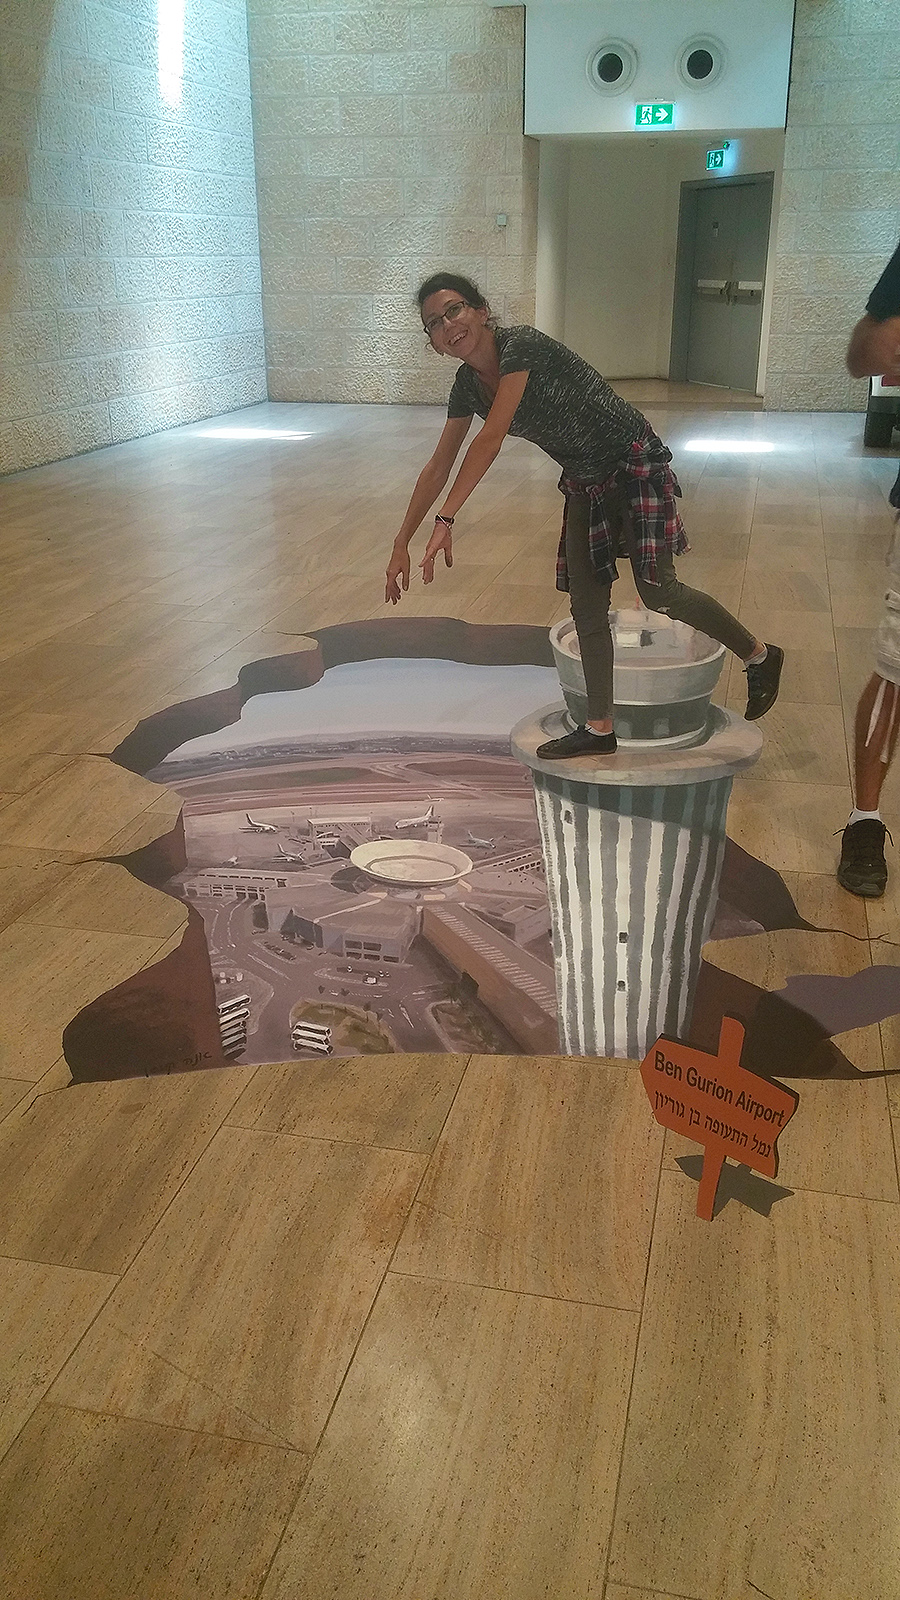 3D Floor Sticker by Ana Kogan in Ben Gurion Airport in Israel